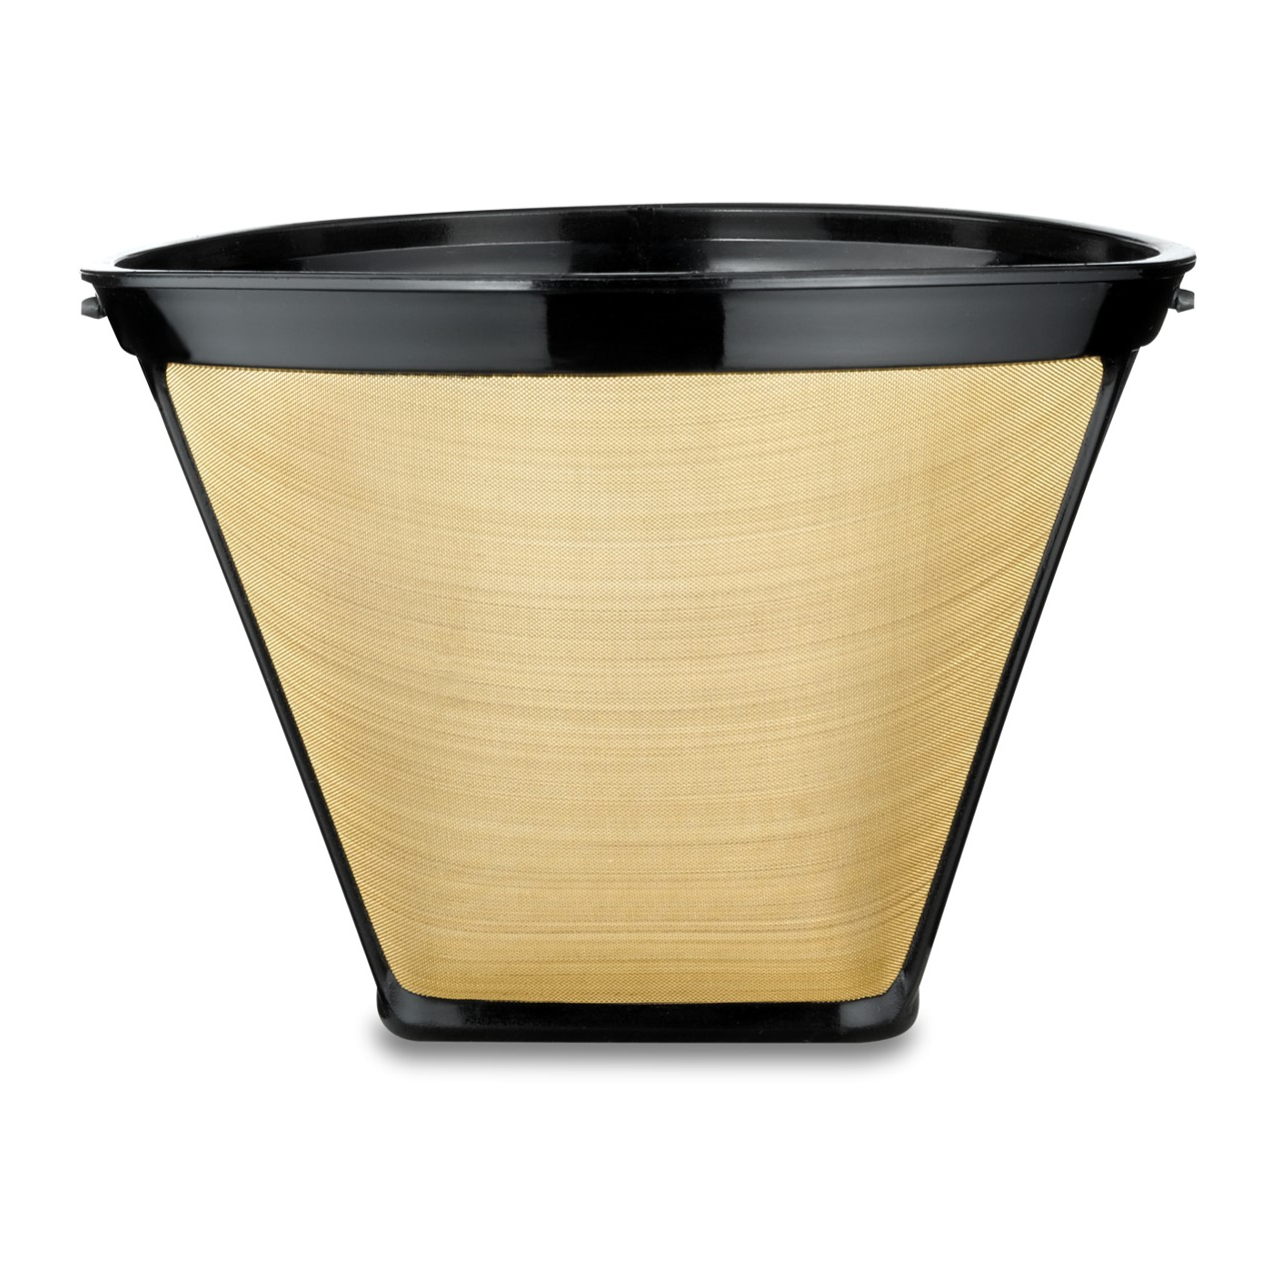 Espresso Filter Basket Replacement Accessories Reusable No.4 Cone